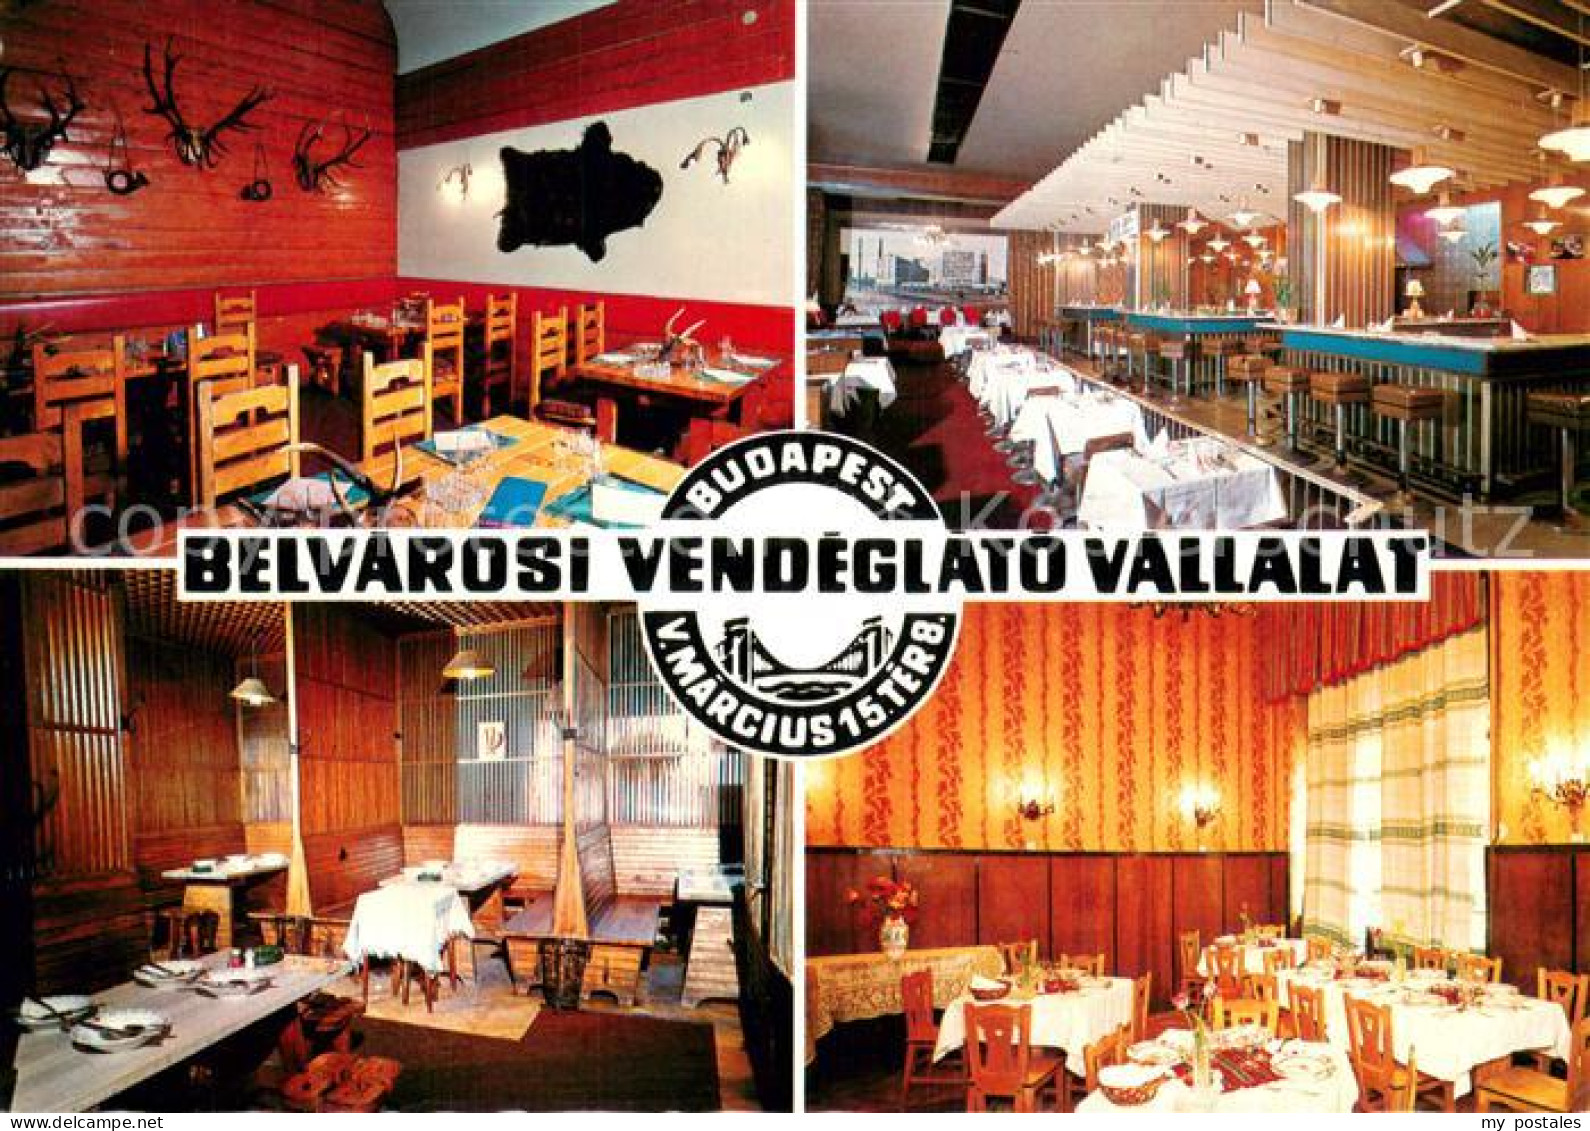 73744001 Budapest Belvarosi Vendeglato Vallalat Restaurant Budapest - Hungary